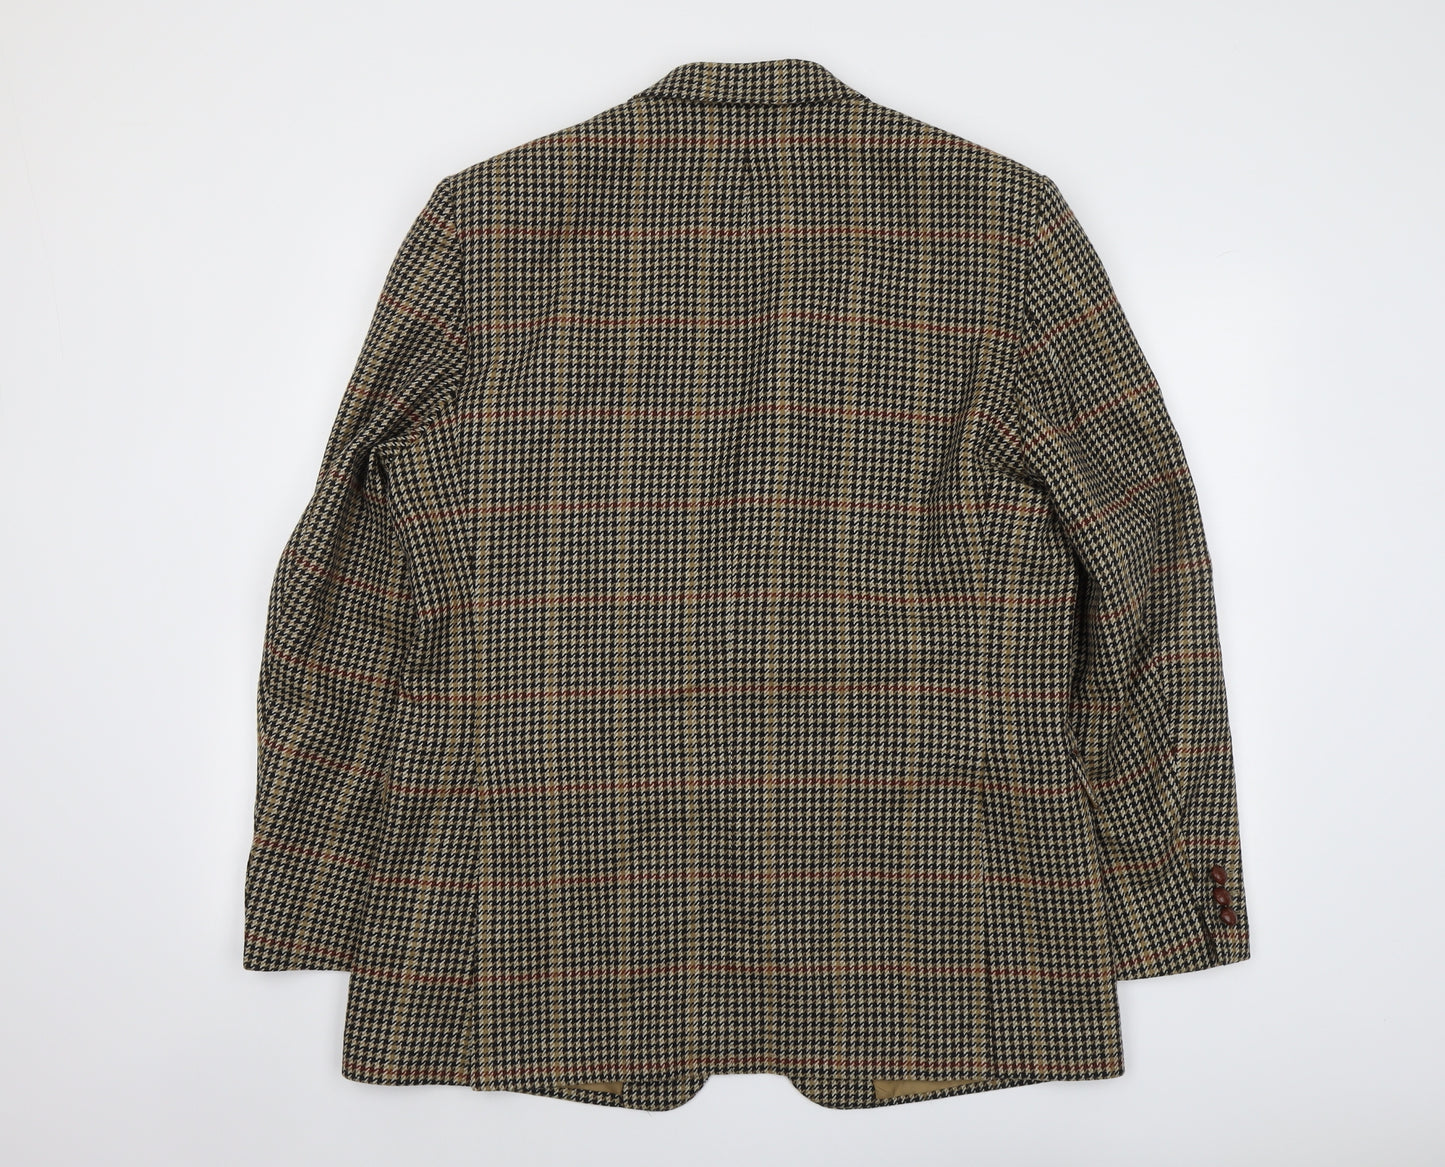 DAKS Mens Brown Geometric Wool Jacket Blazer Size 46 Regular